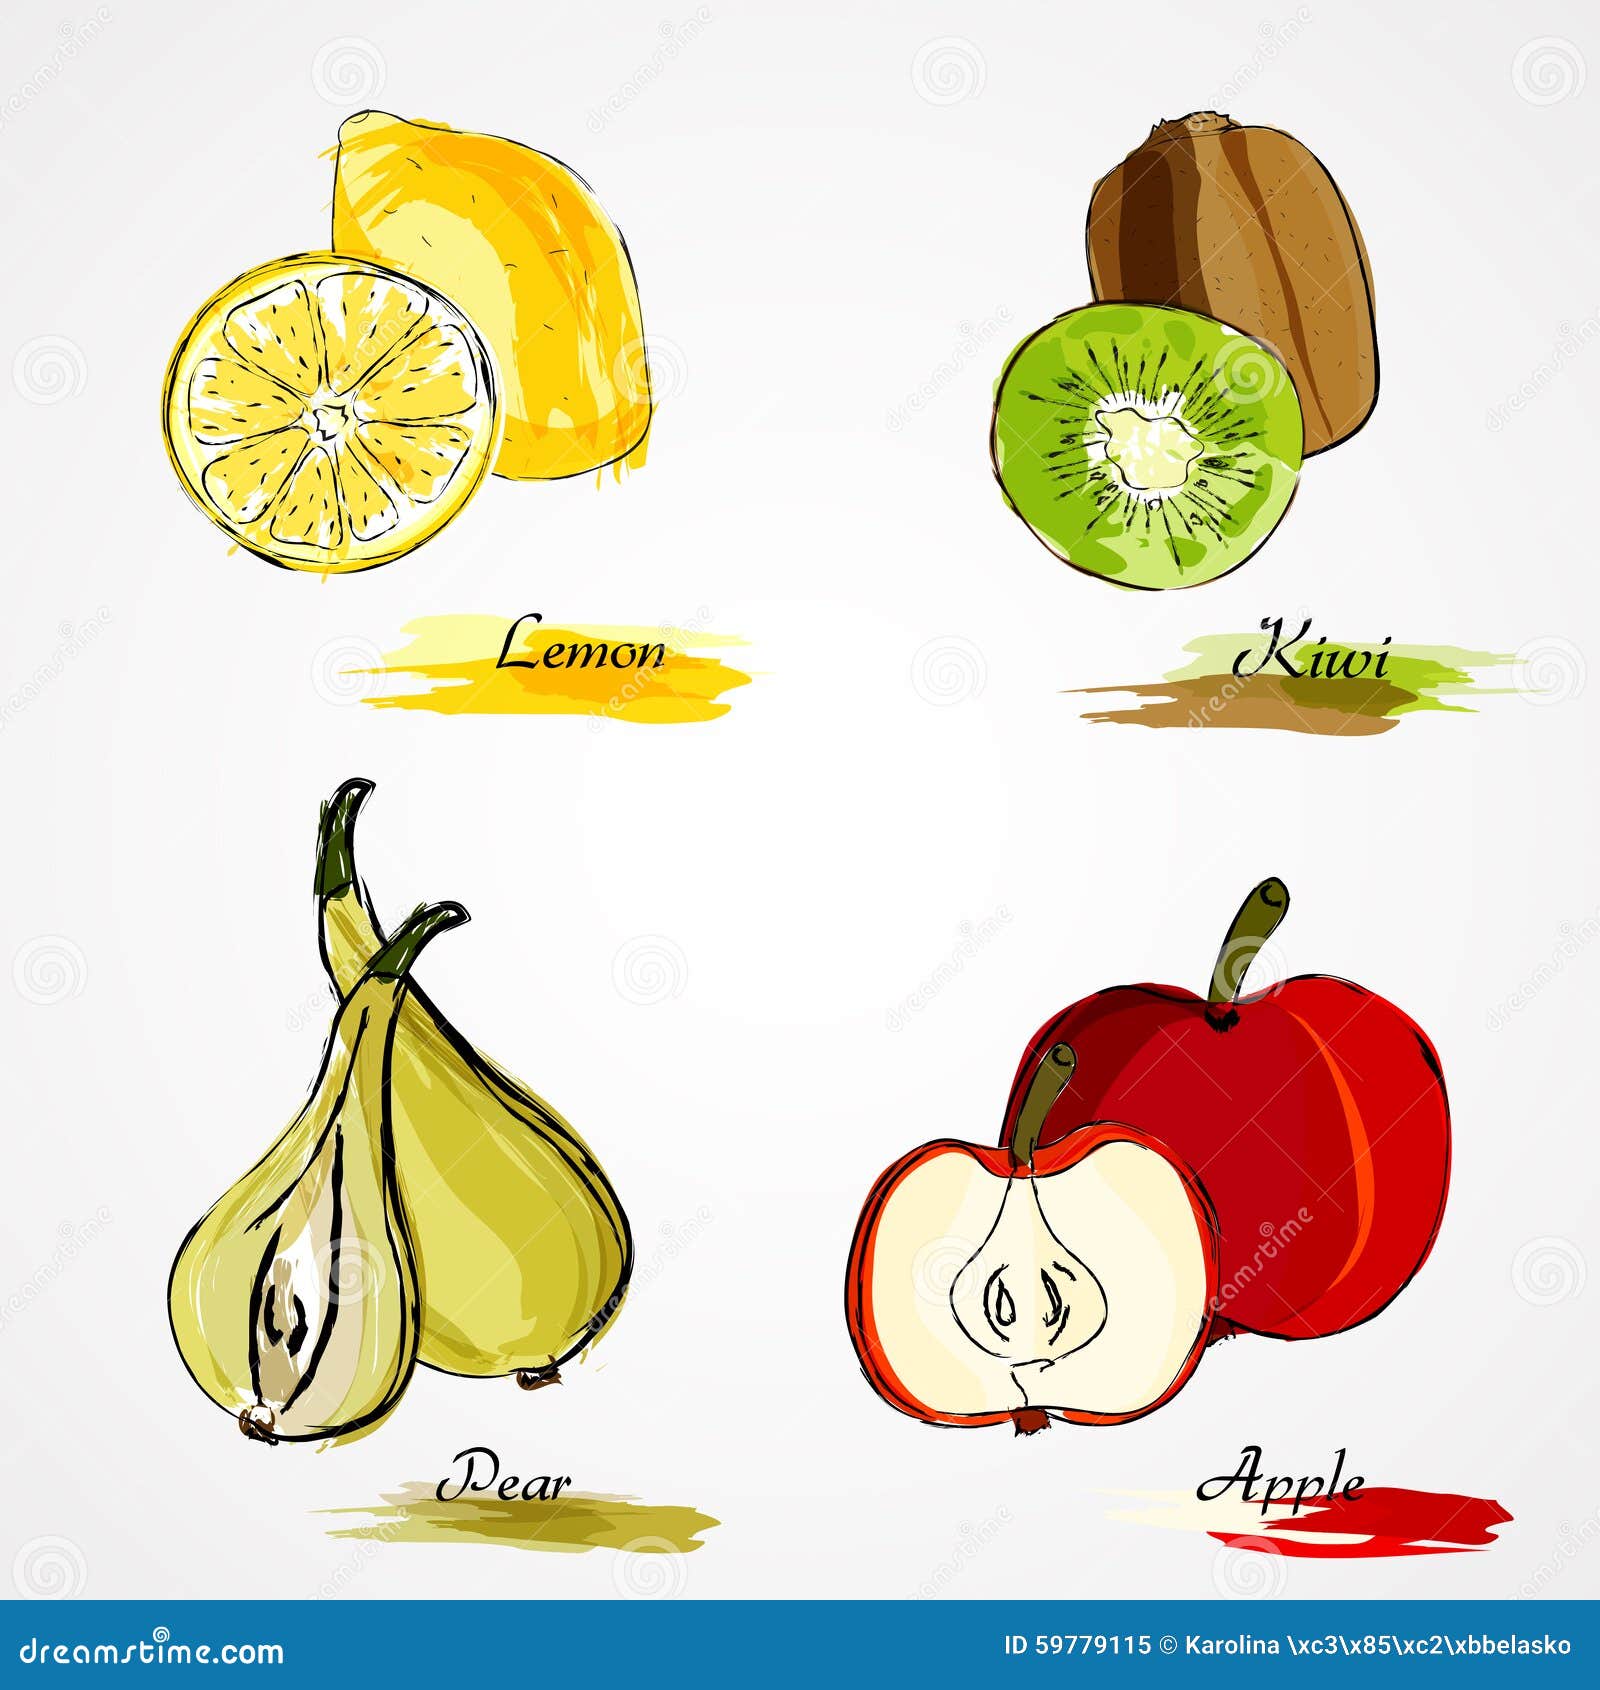 https://thumbs.dreamstime.com/z/set-fruits-hand-drawn-vector-ripe-whole-slice-lemon-kiwi-pear-apple-light-background-59779115.jpg